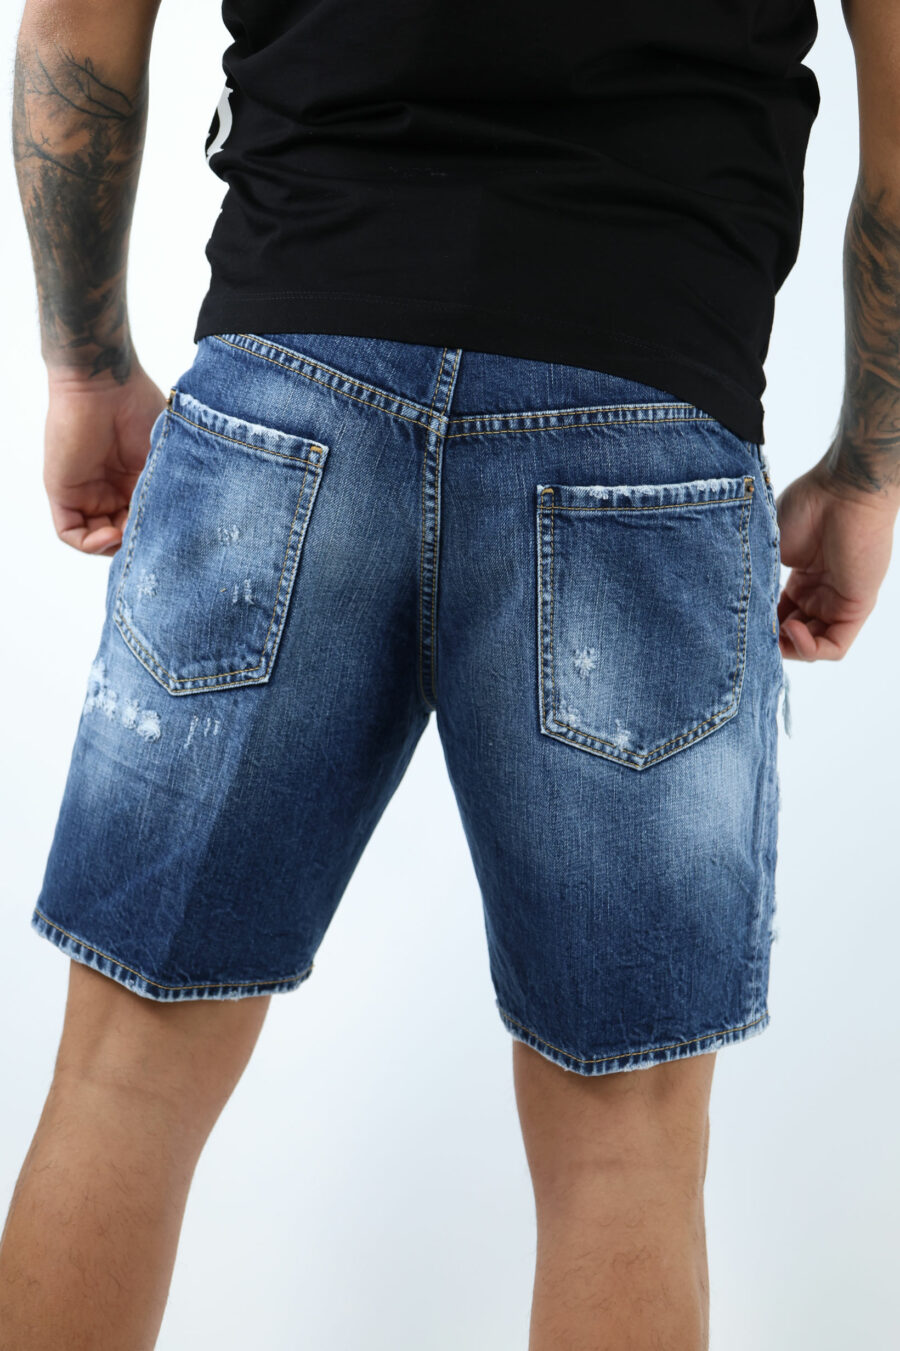 Blue denim shorts "marine short" with red logo - 106832